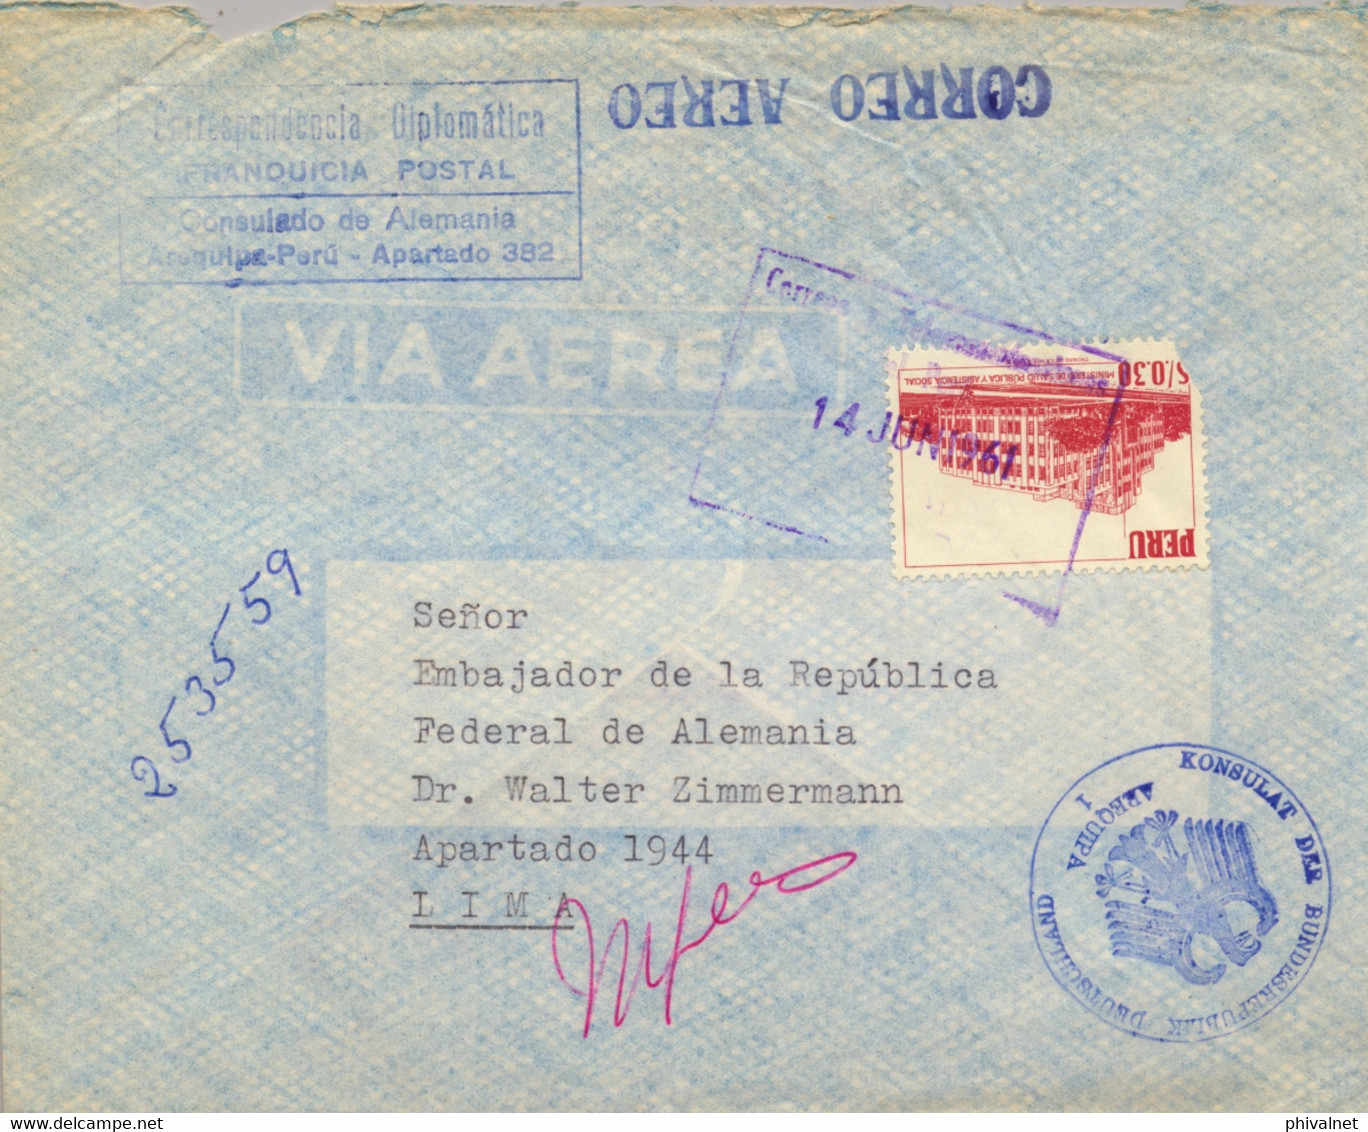 1961 PERÚ , SOBRE CIRCULADO ENTRE AREQUIPA Y LIMA , CORREO CONSULAR , CORRESPONDENCIA DIPLOMÁTICA / FRANQUICIA POSTAL - Perù